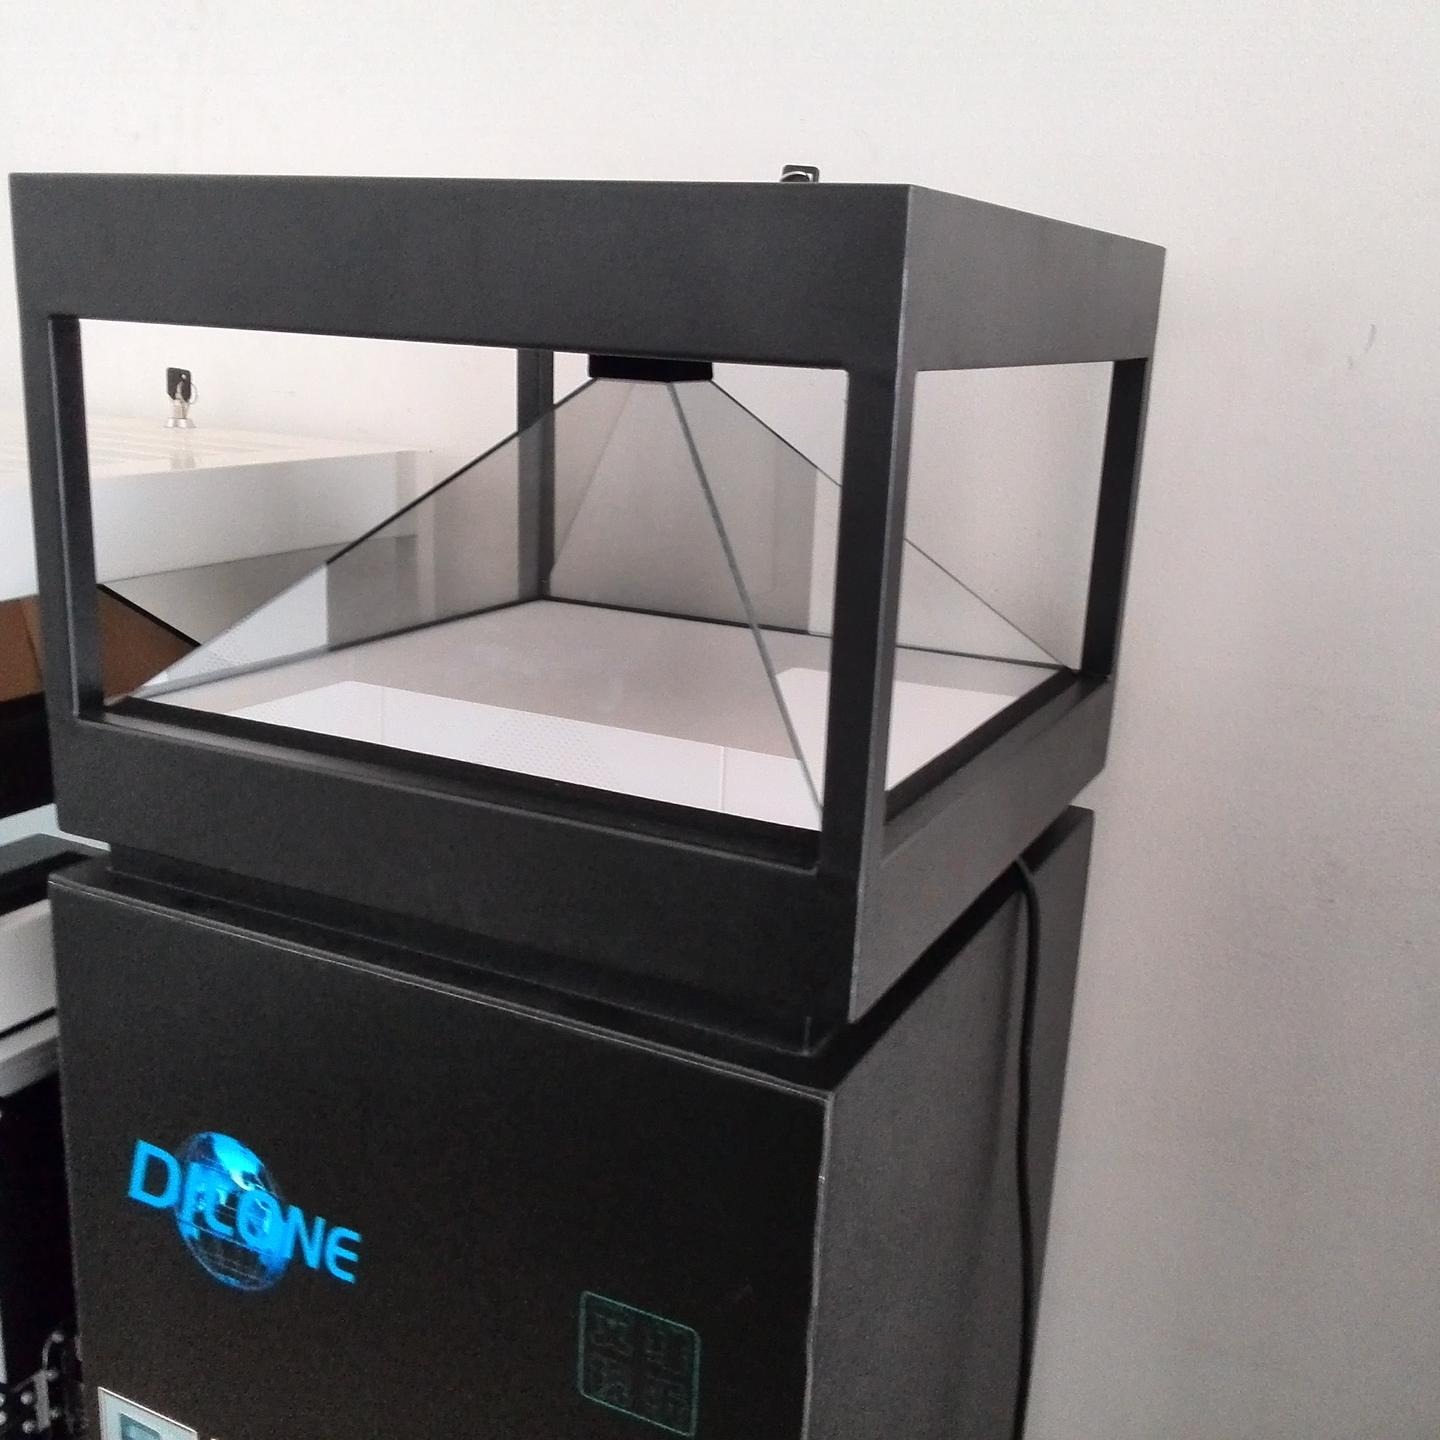 DILONE全息投影设备 珠宝展示柜 360全息展示 3D全息展示柜 投影设备 全息设备 祼眼3D 立体成像 立体投影